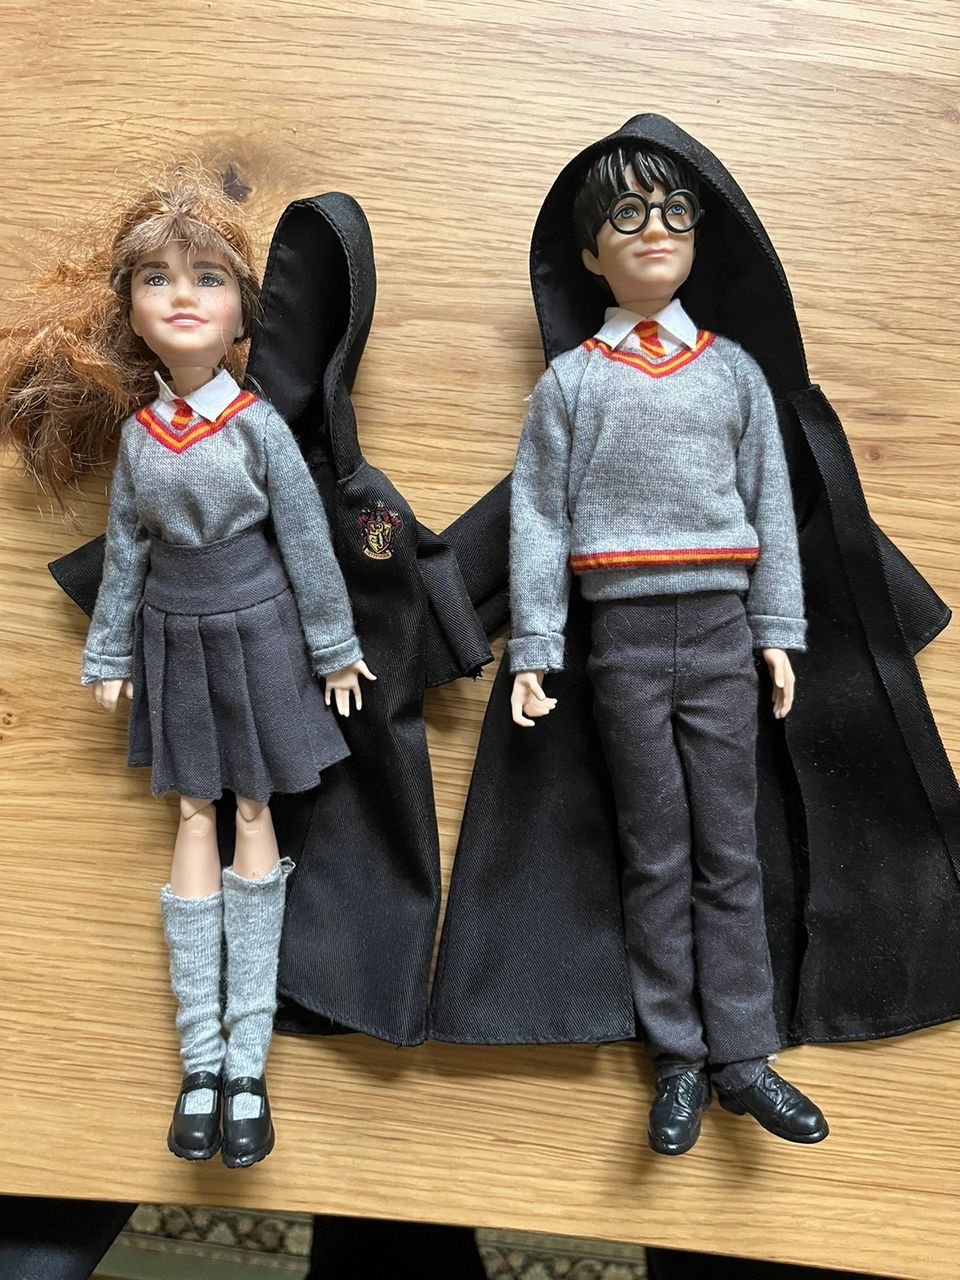 Harry Potter nuket